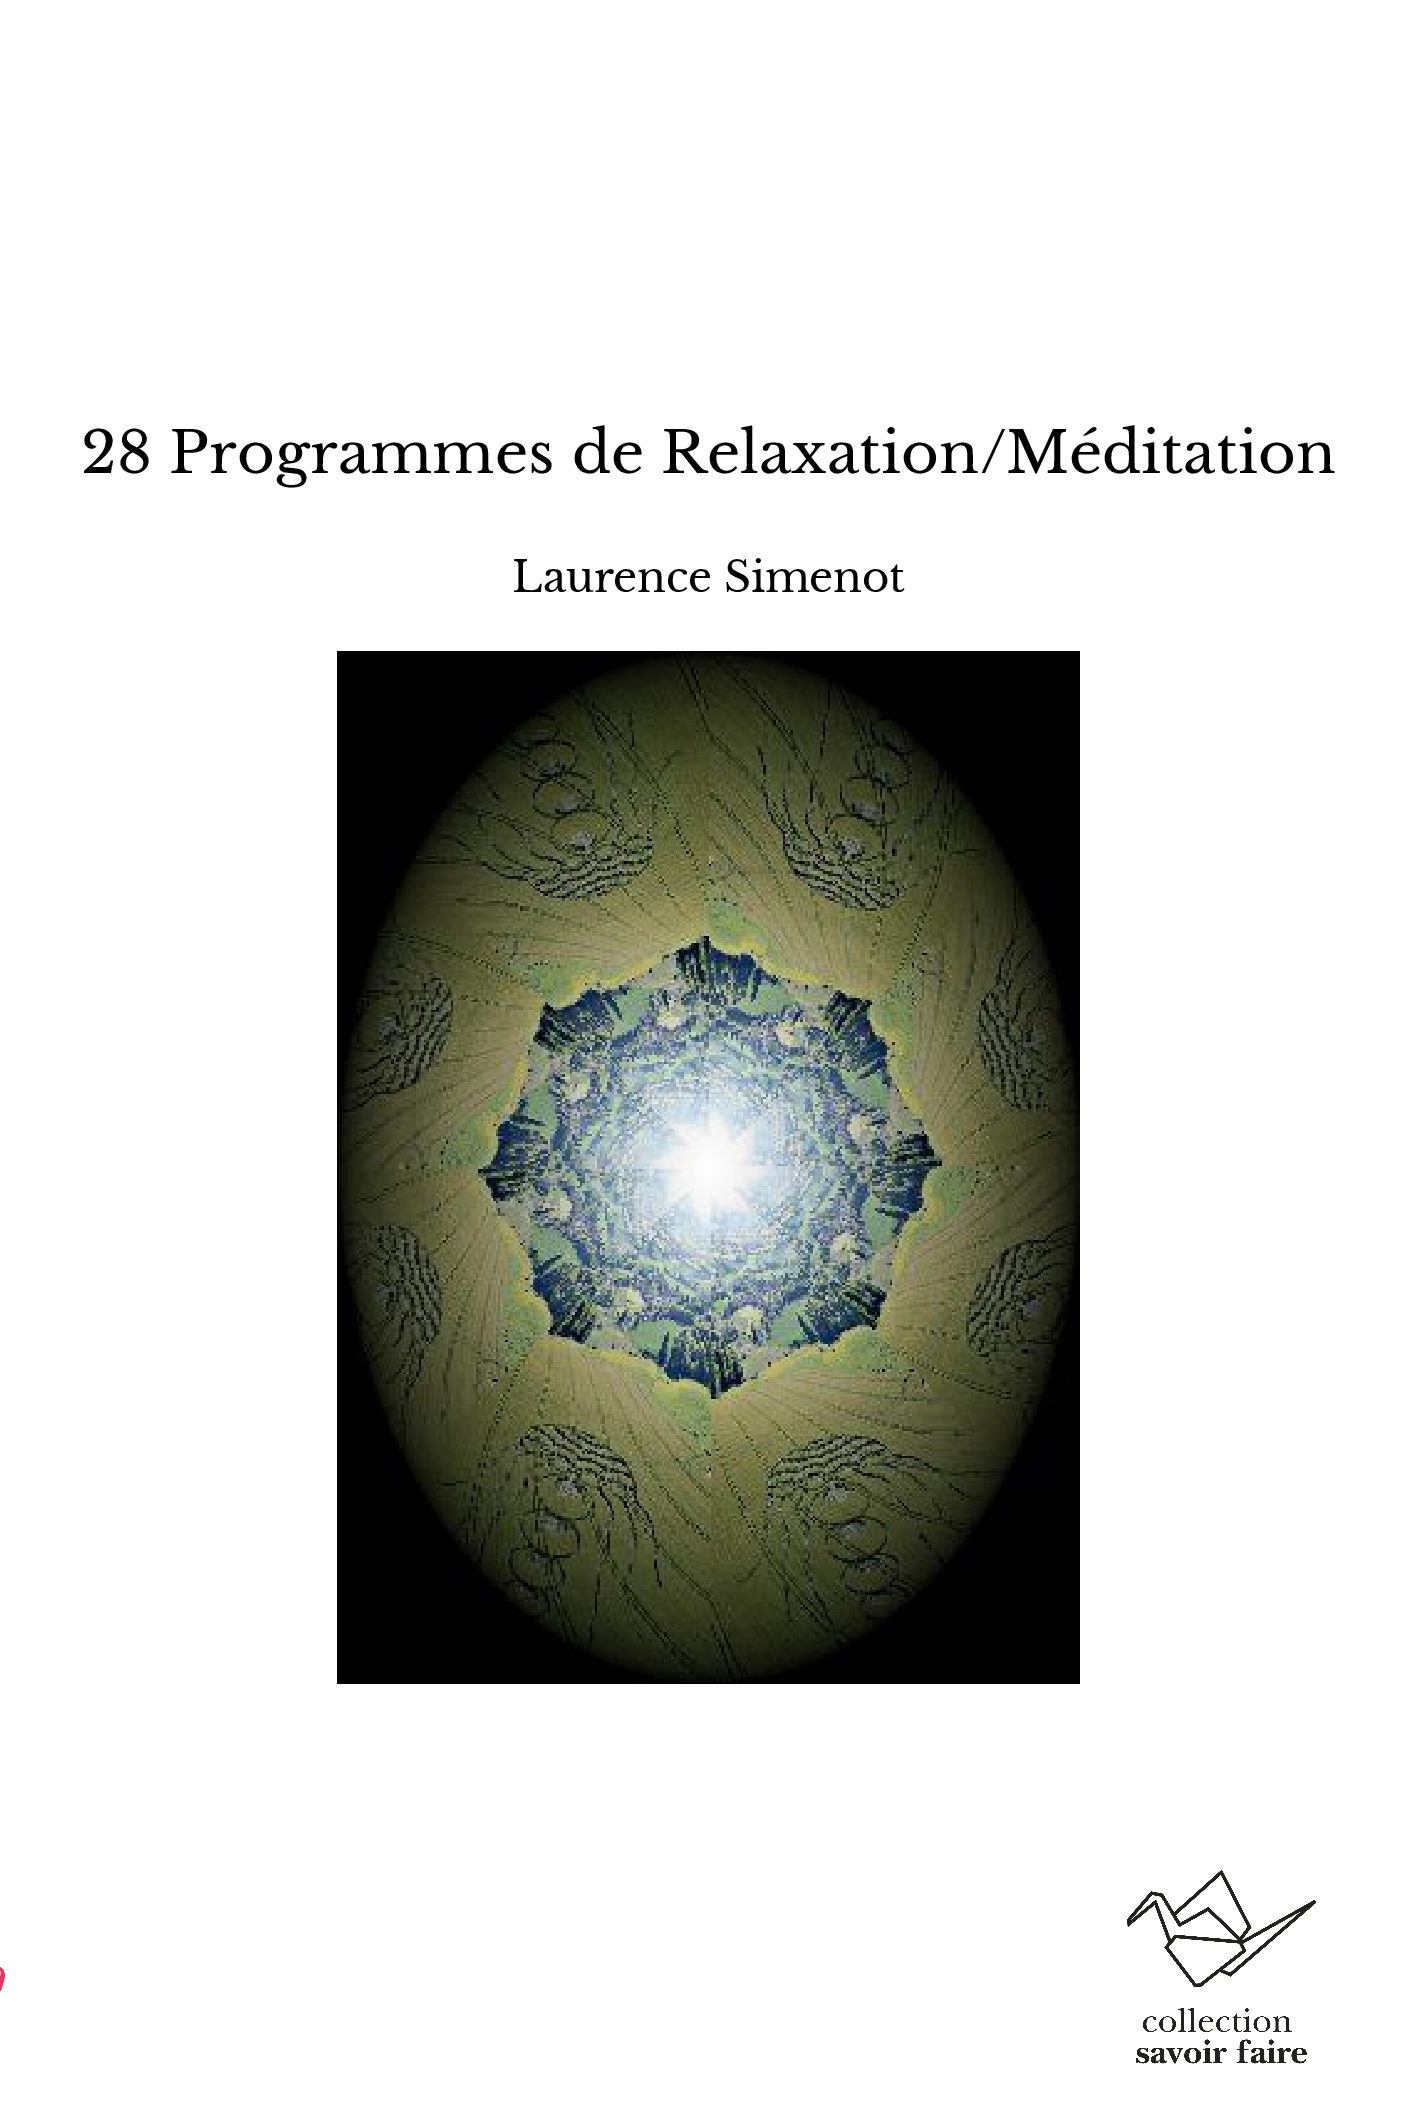 28 Programmes de Relaxation/Méditation - Laurence Simenot